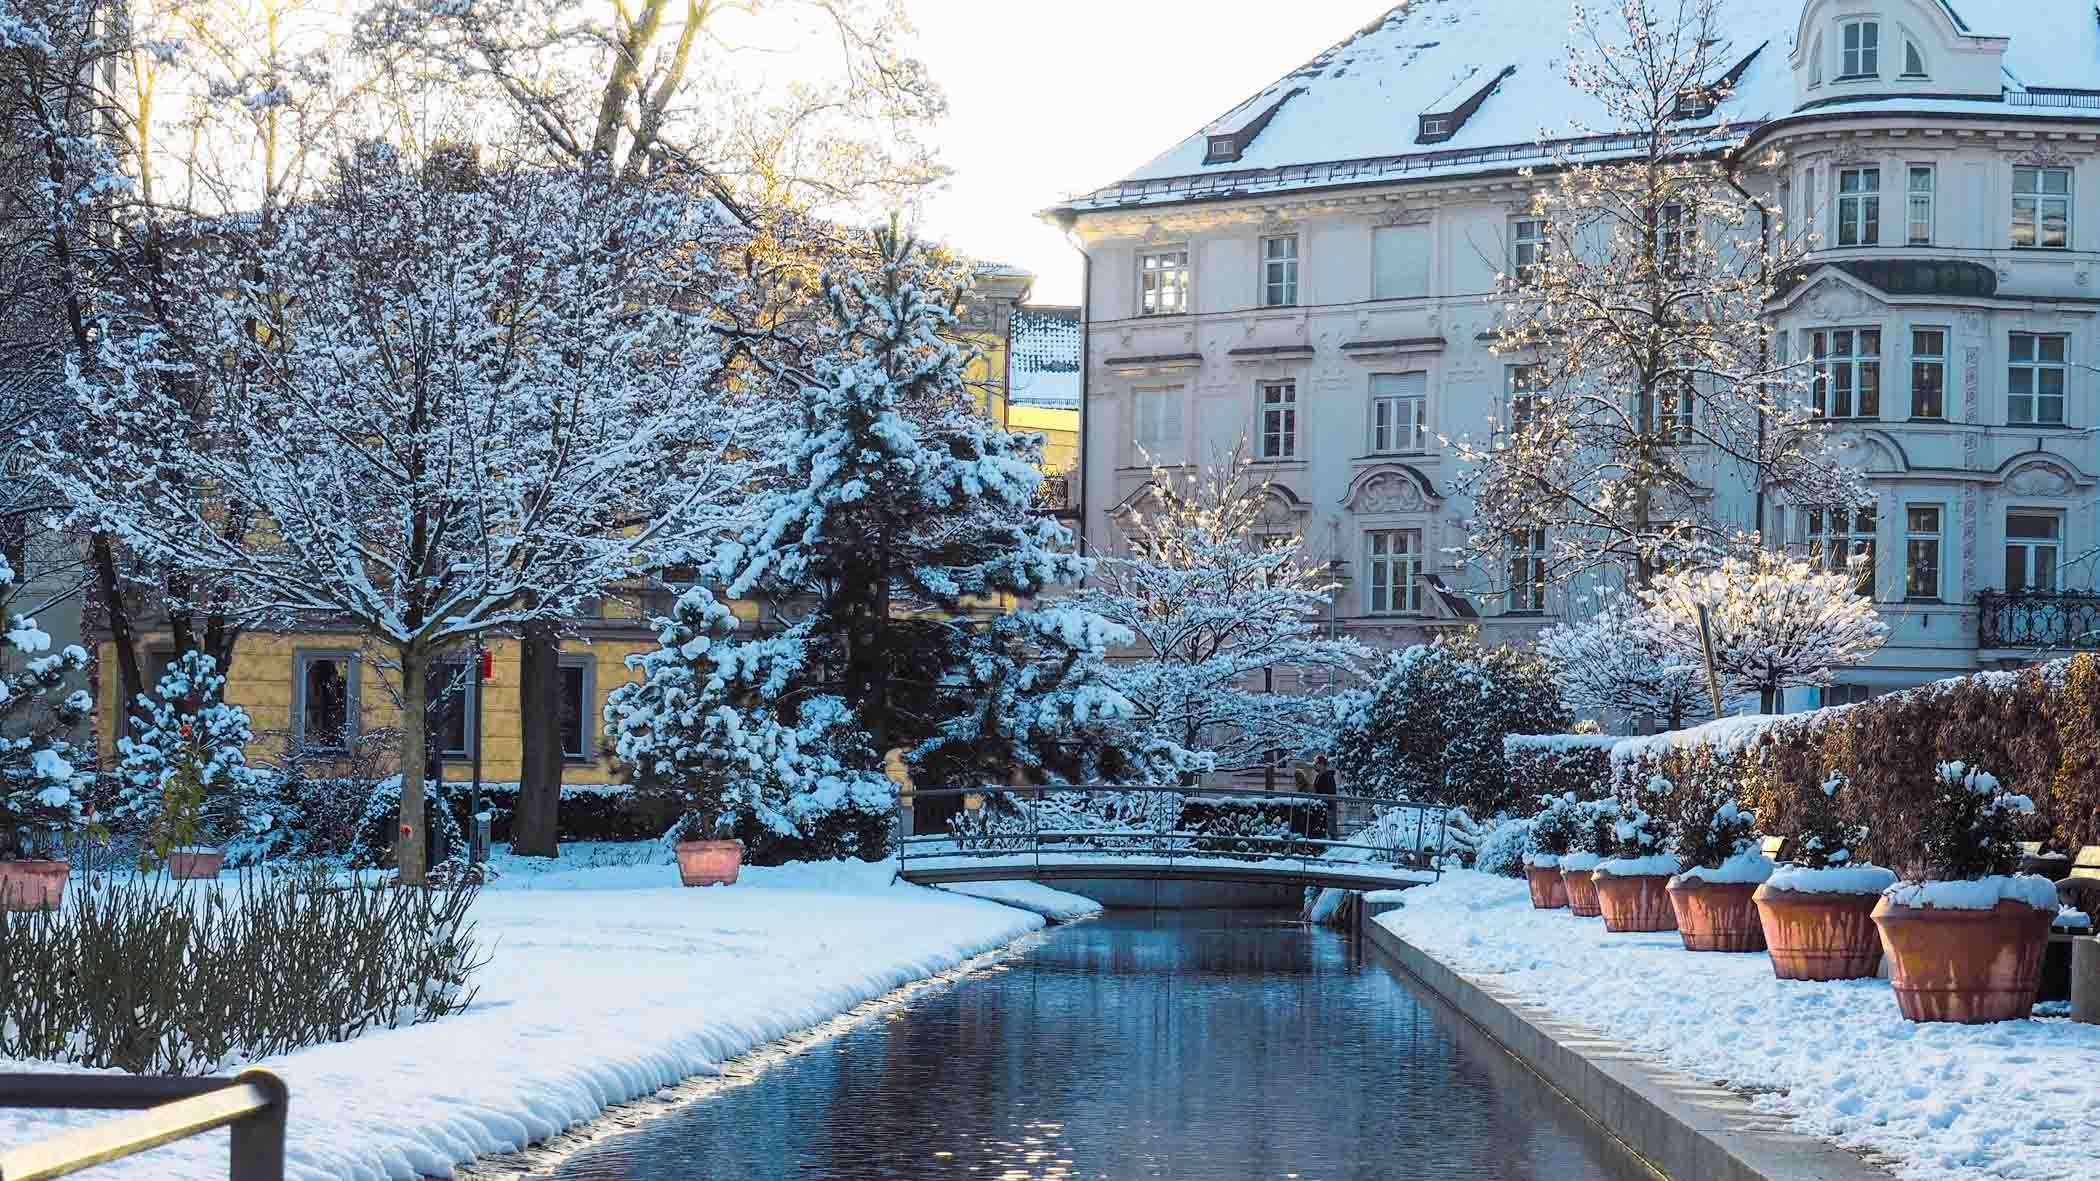 Winter in Rosenheim